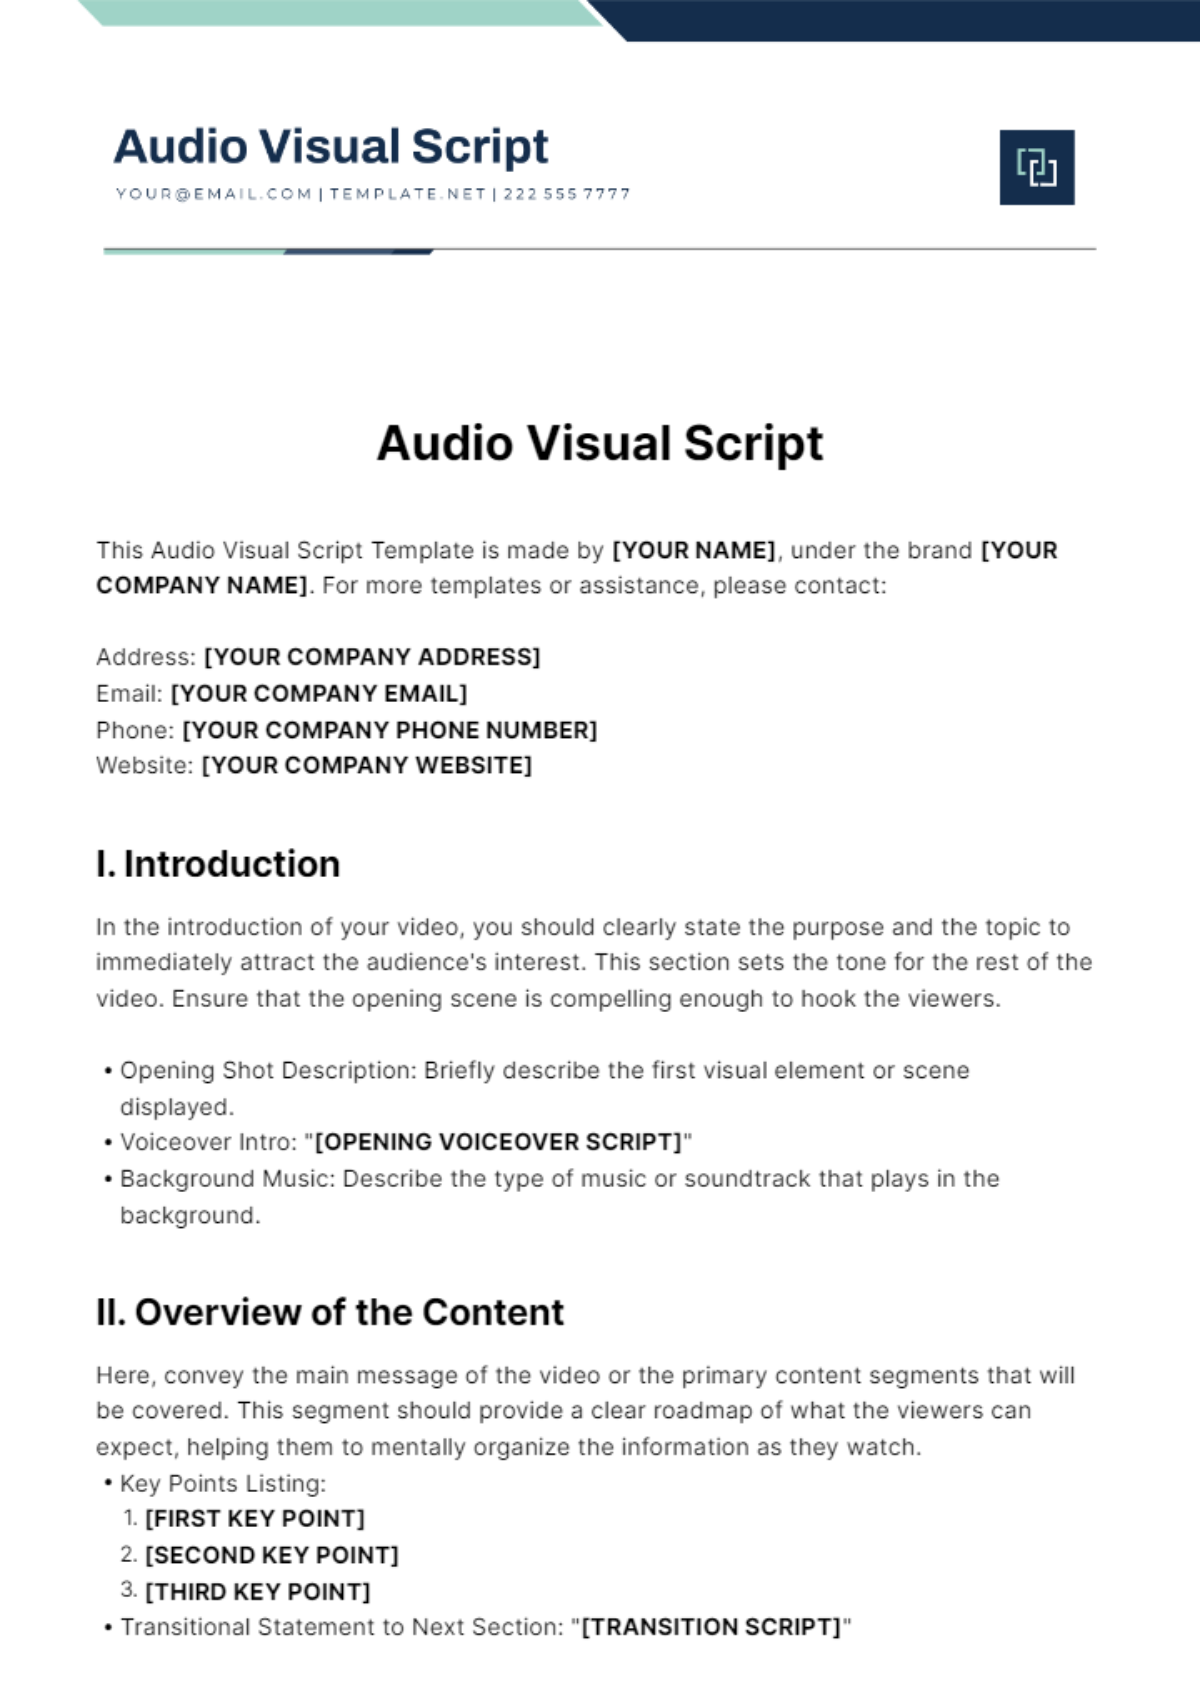 Audio Visual Script Template